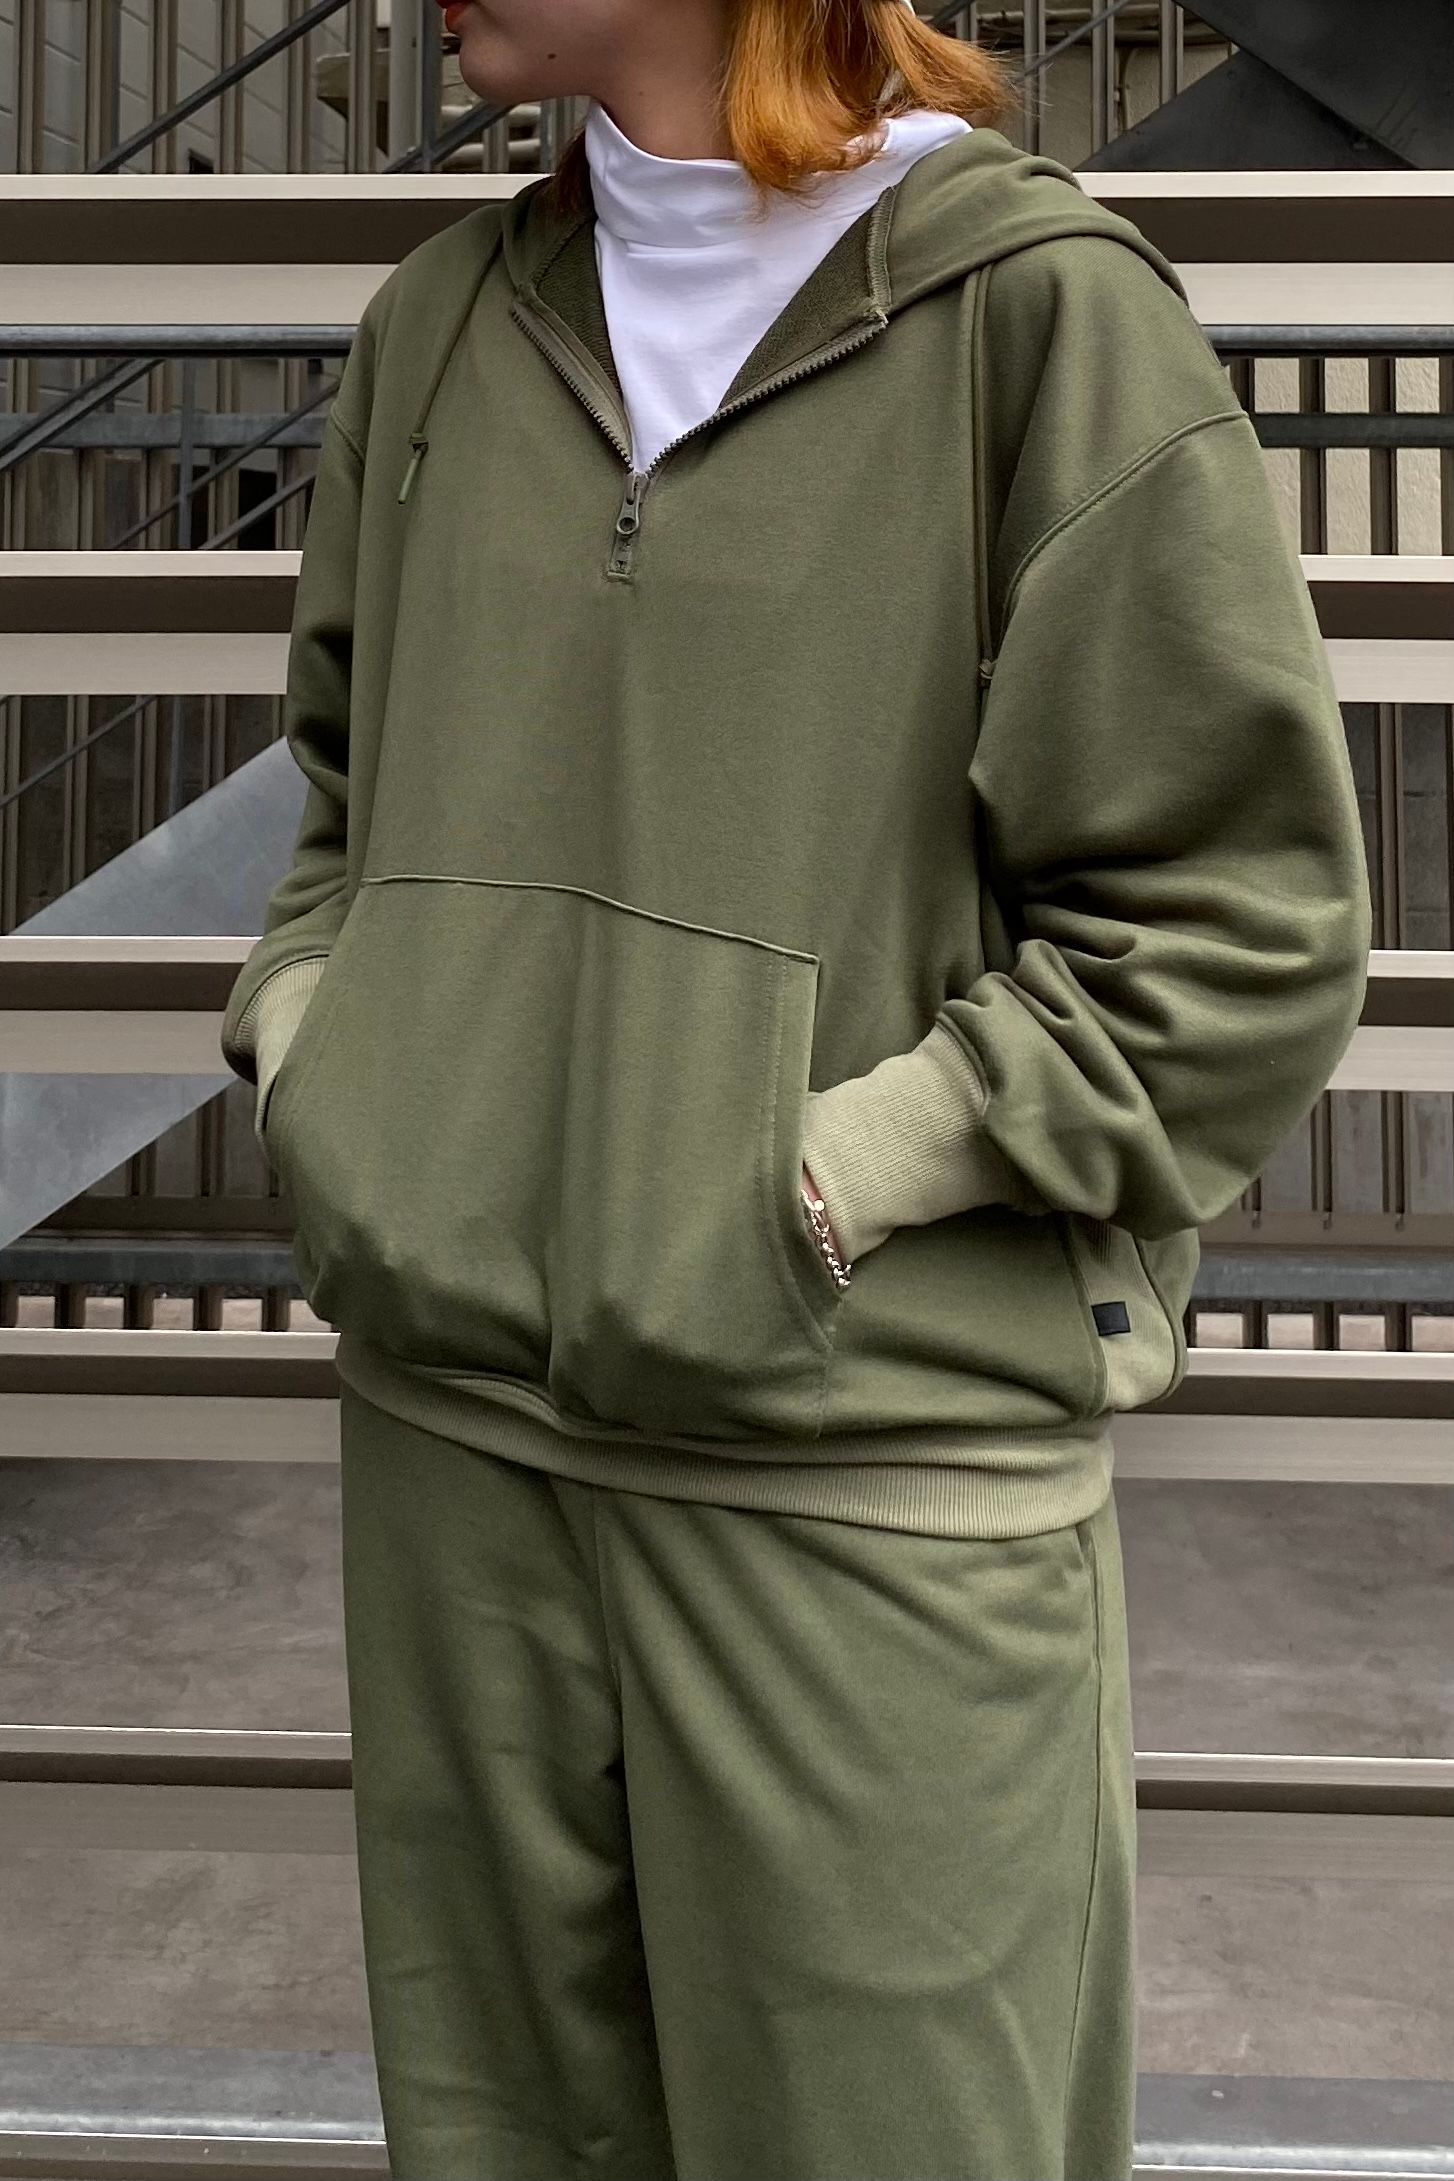 DAIWA PIER39 - women's tech sweat half zip hoodie -olive green